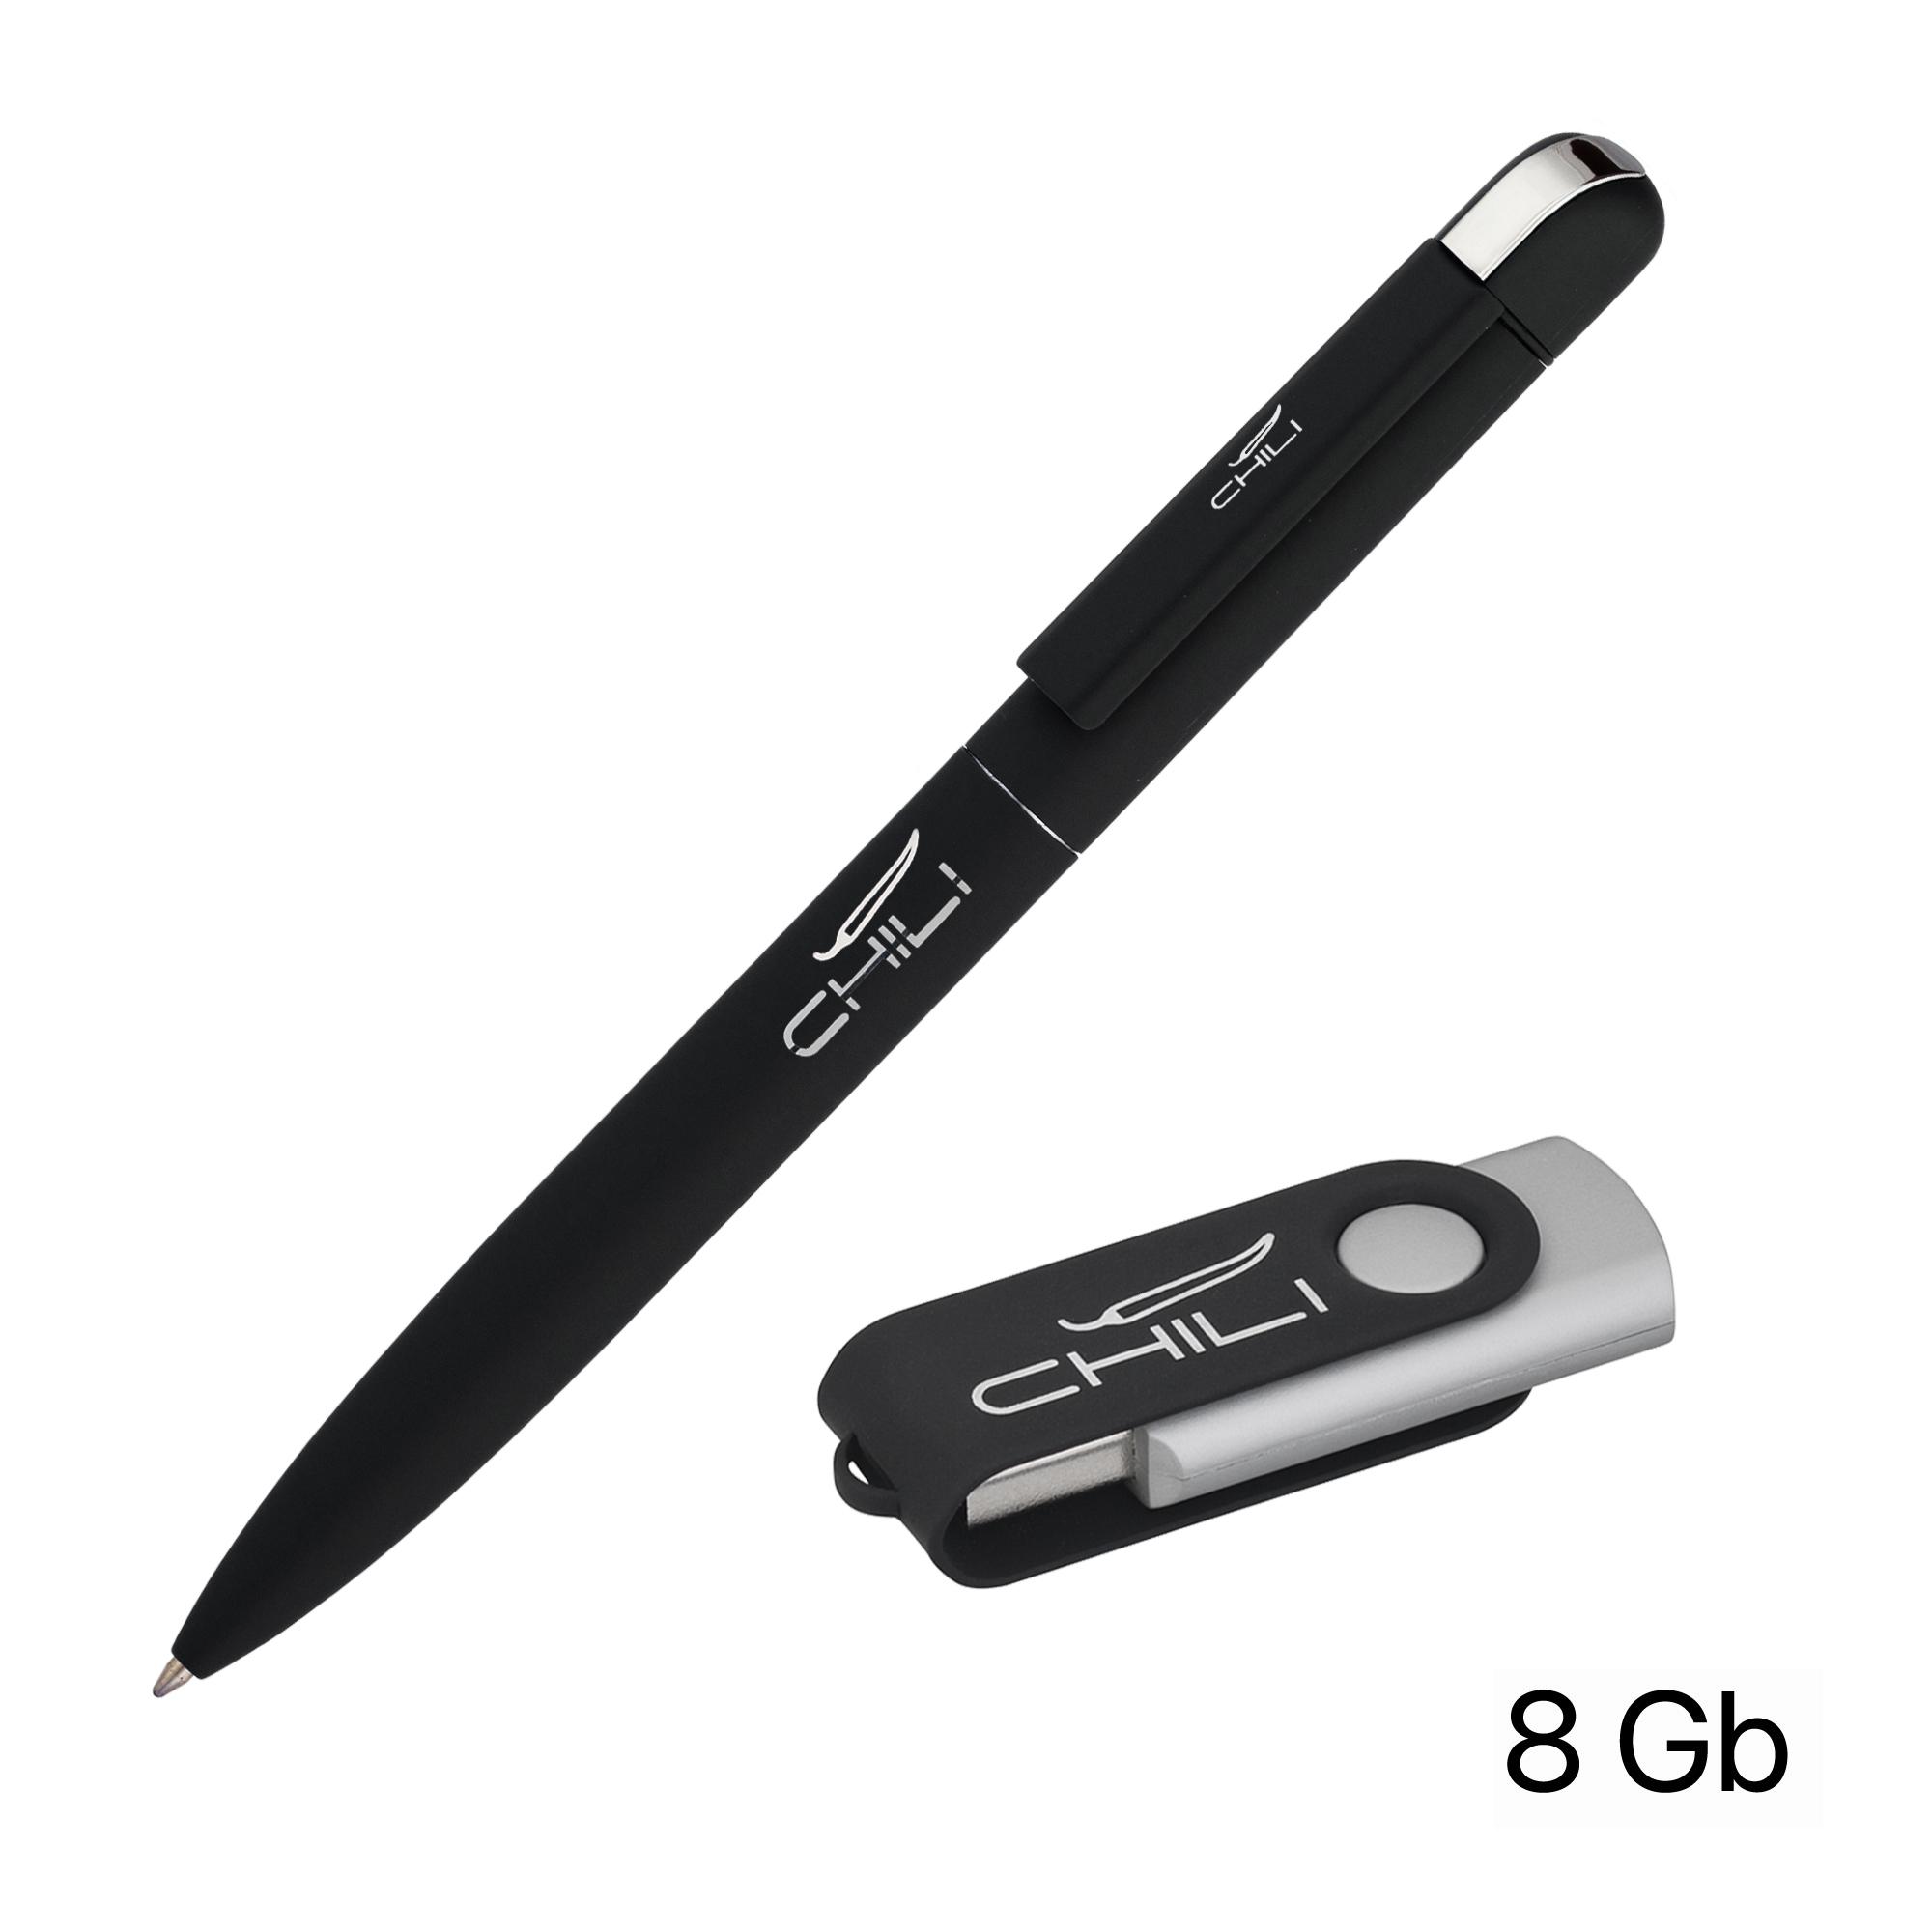 Набор ручка + флеш-карта 8 Гб в футляре, покрытие soft touch, цвет черный, фото 1